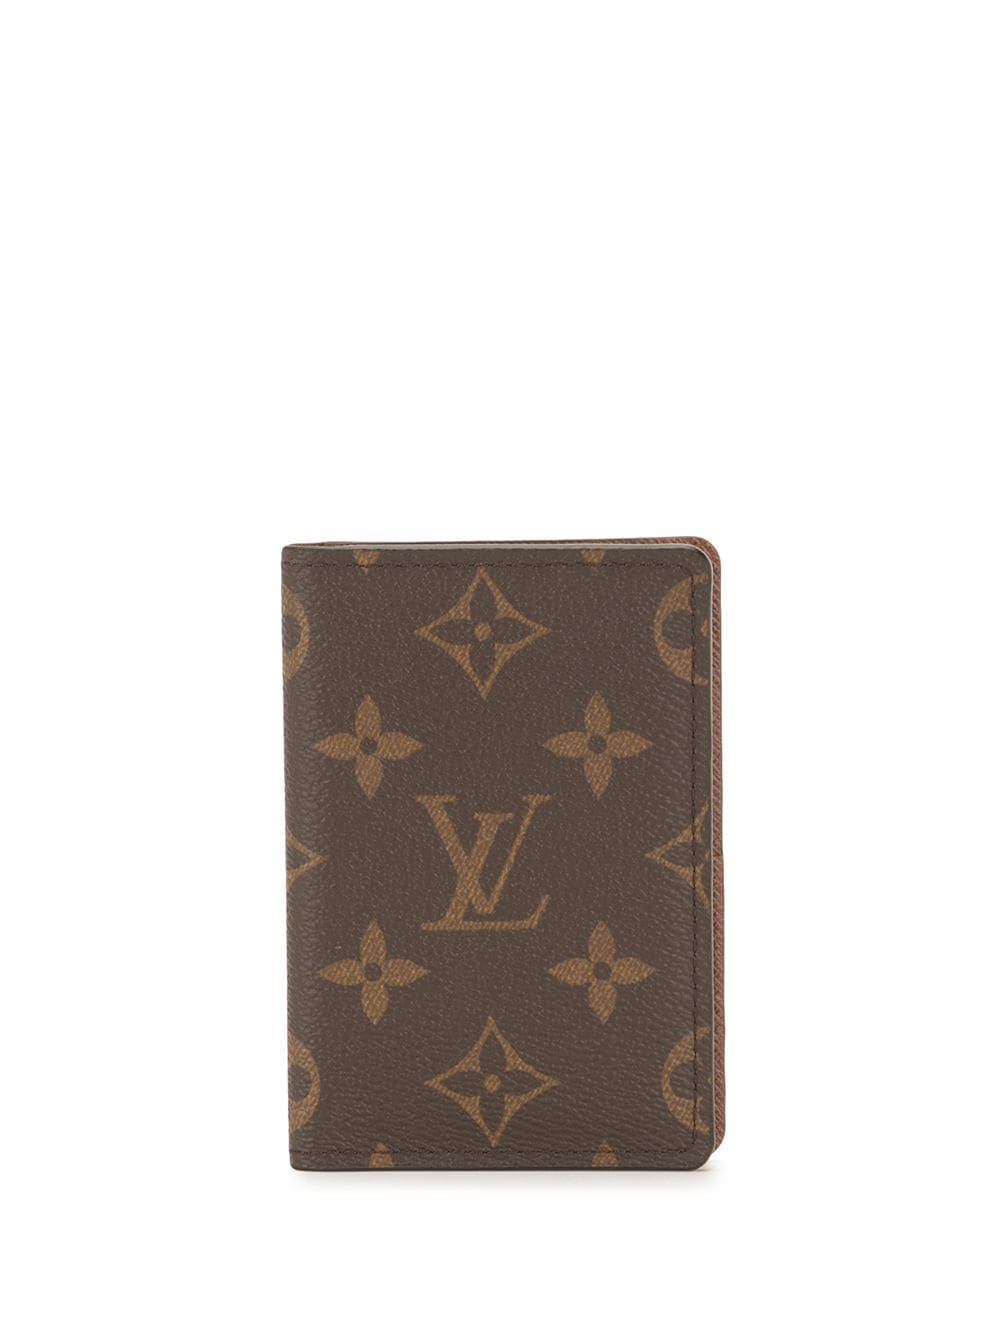 Authentic Louis Vuitton Pocket Organizer Card Holder Monogram for